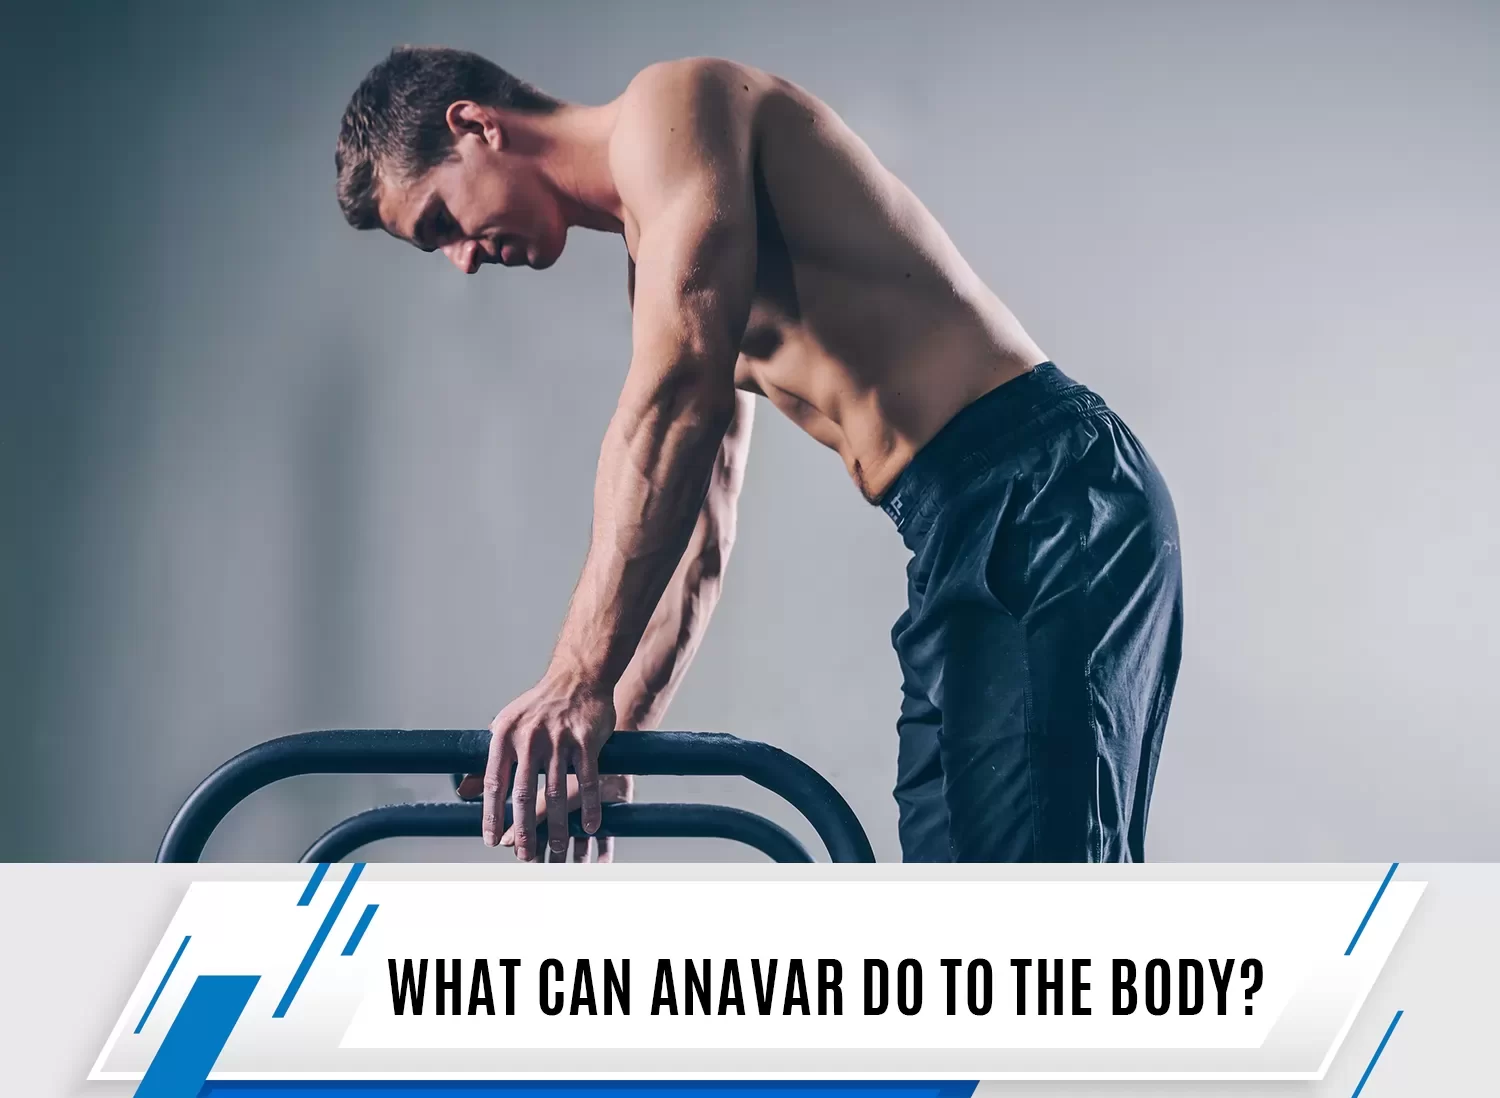 Anavar in the body